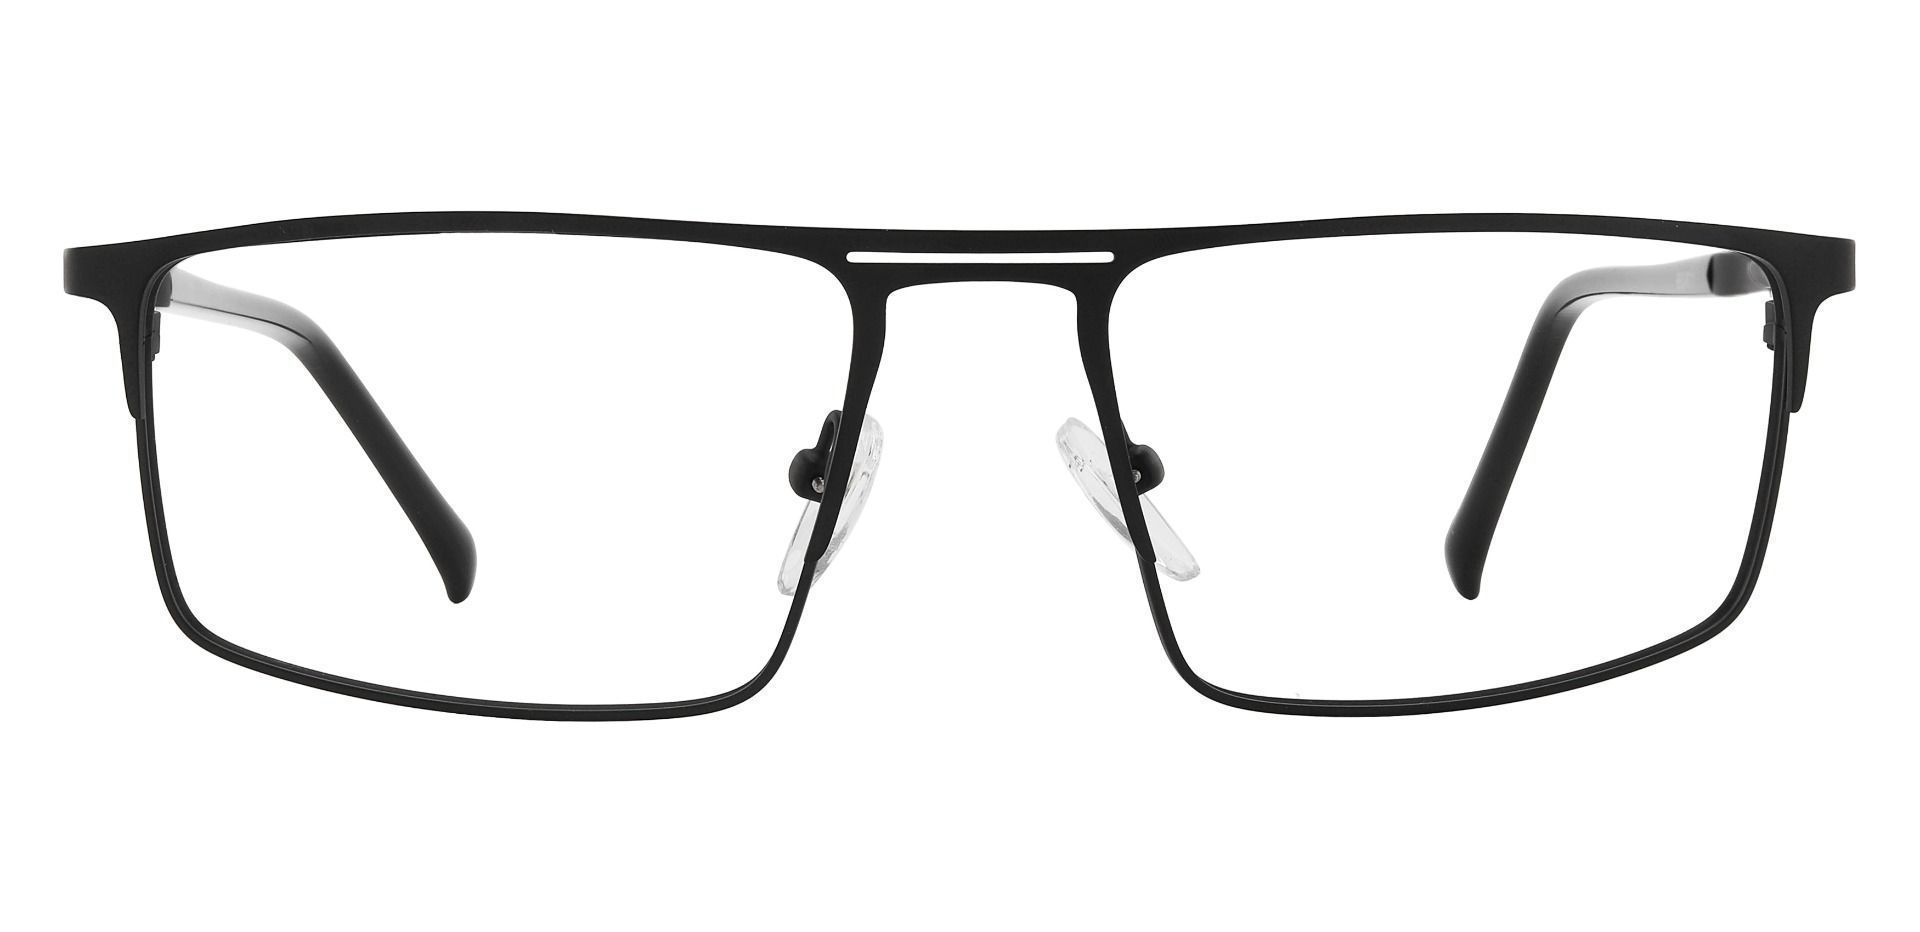 Ballard Aviator Lined Bifocal Glasses - Black